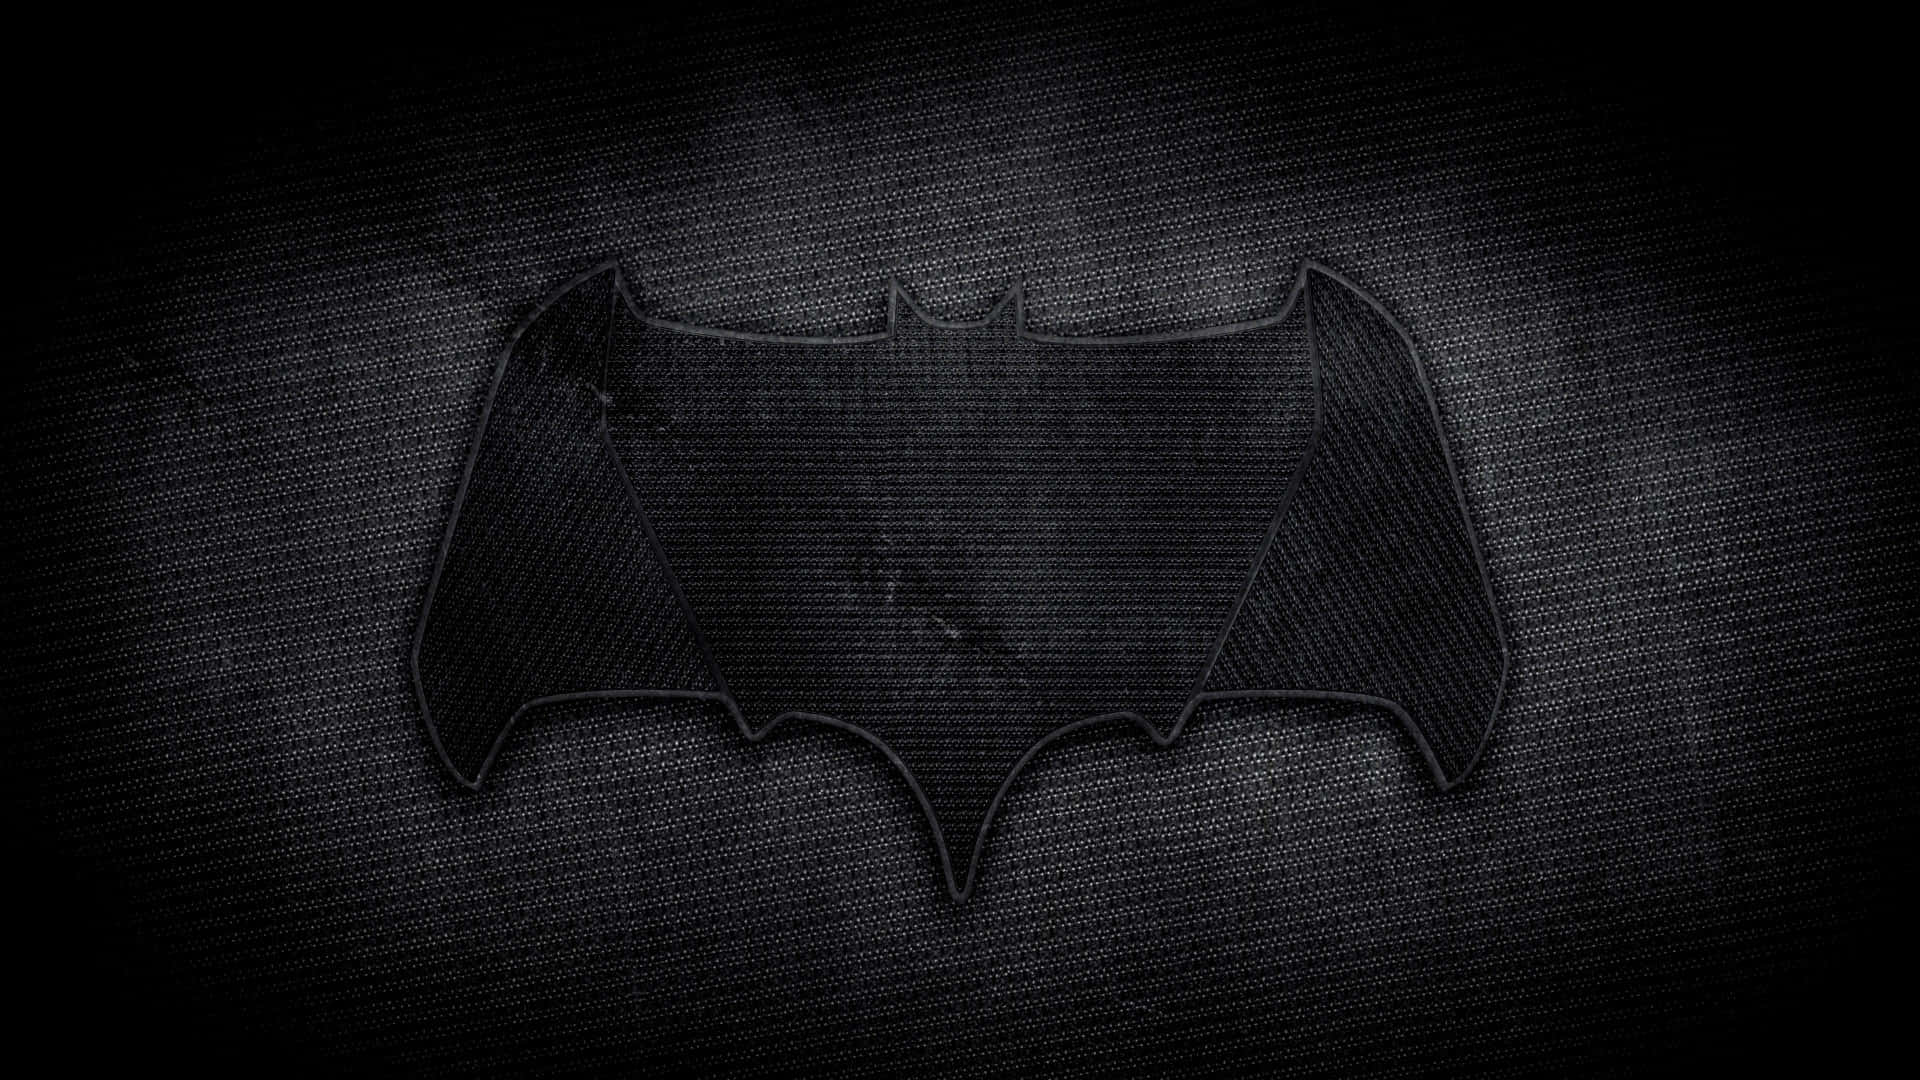 The Majestic Bat Wallpaper